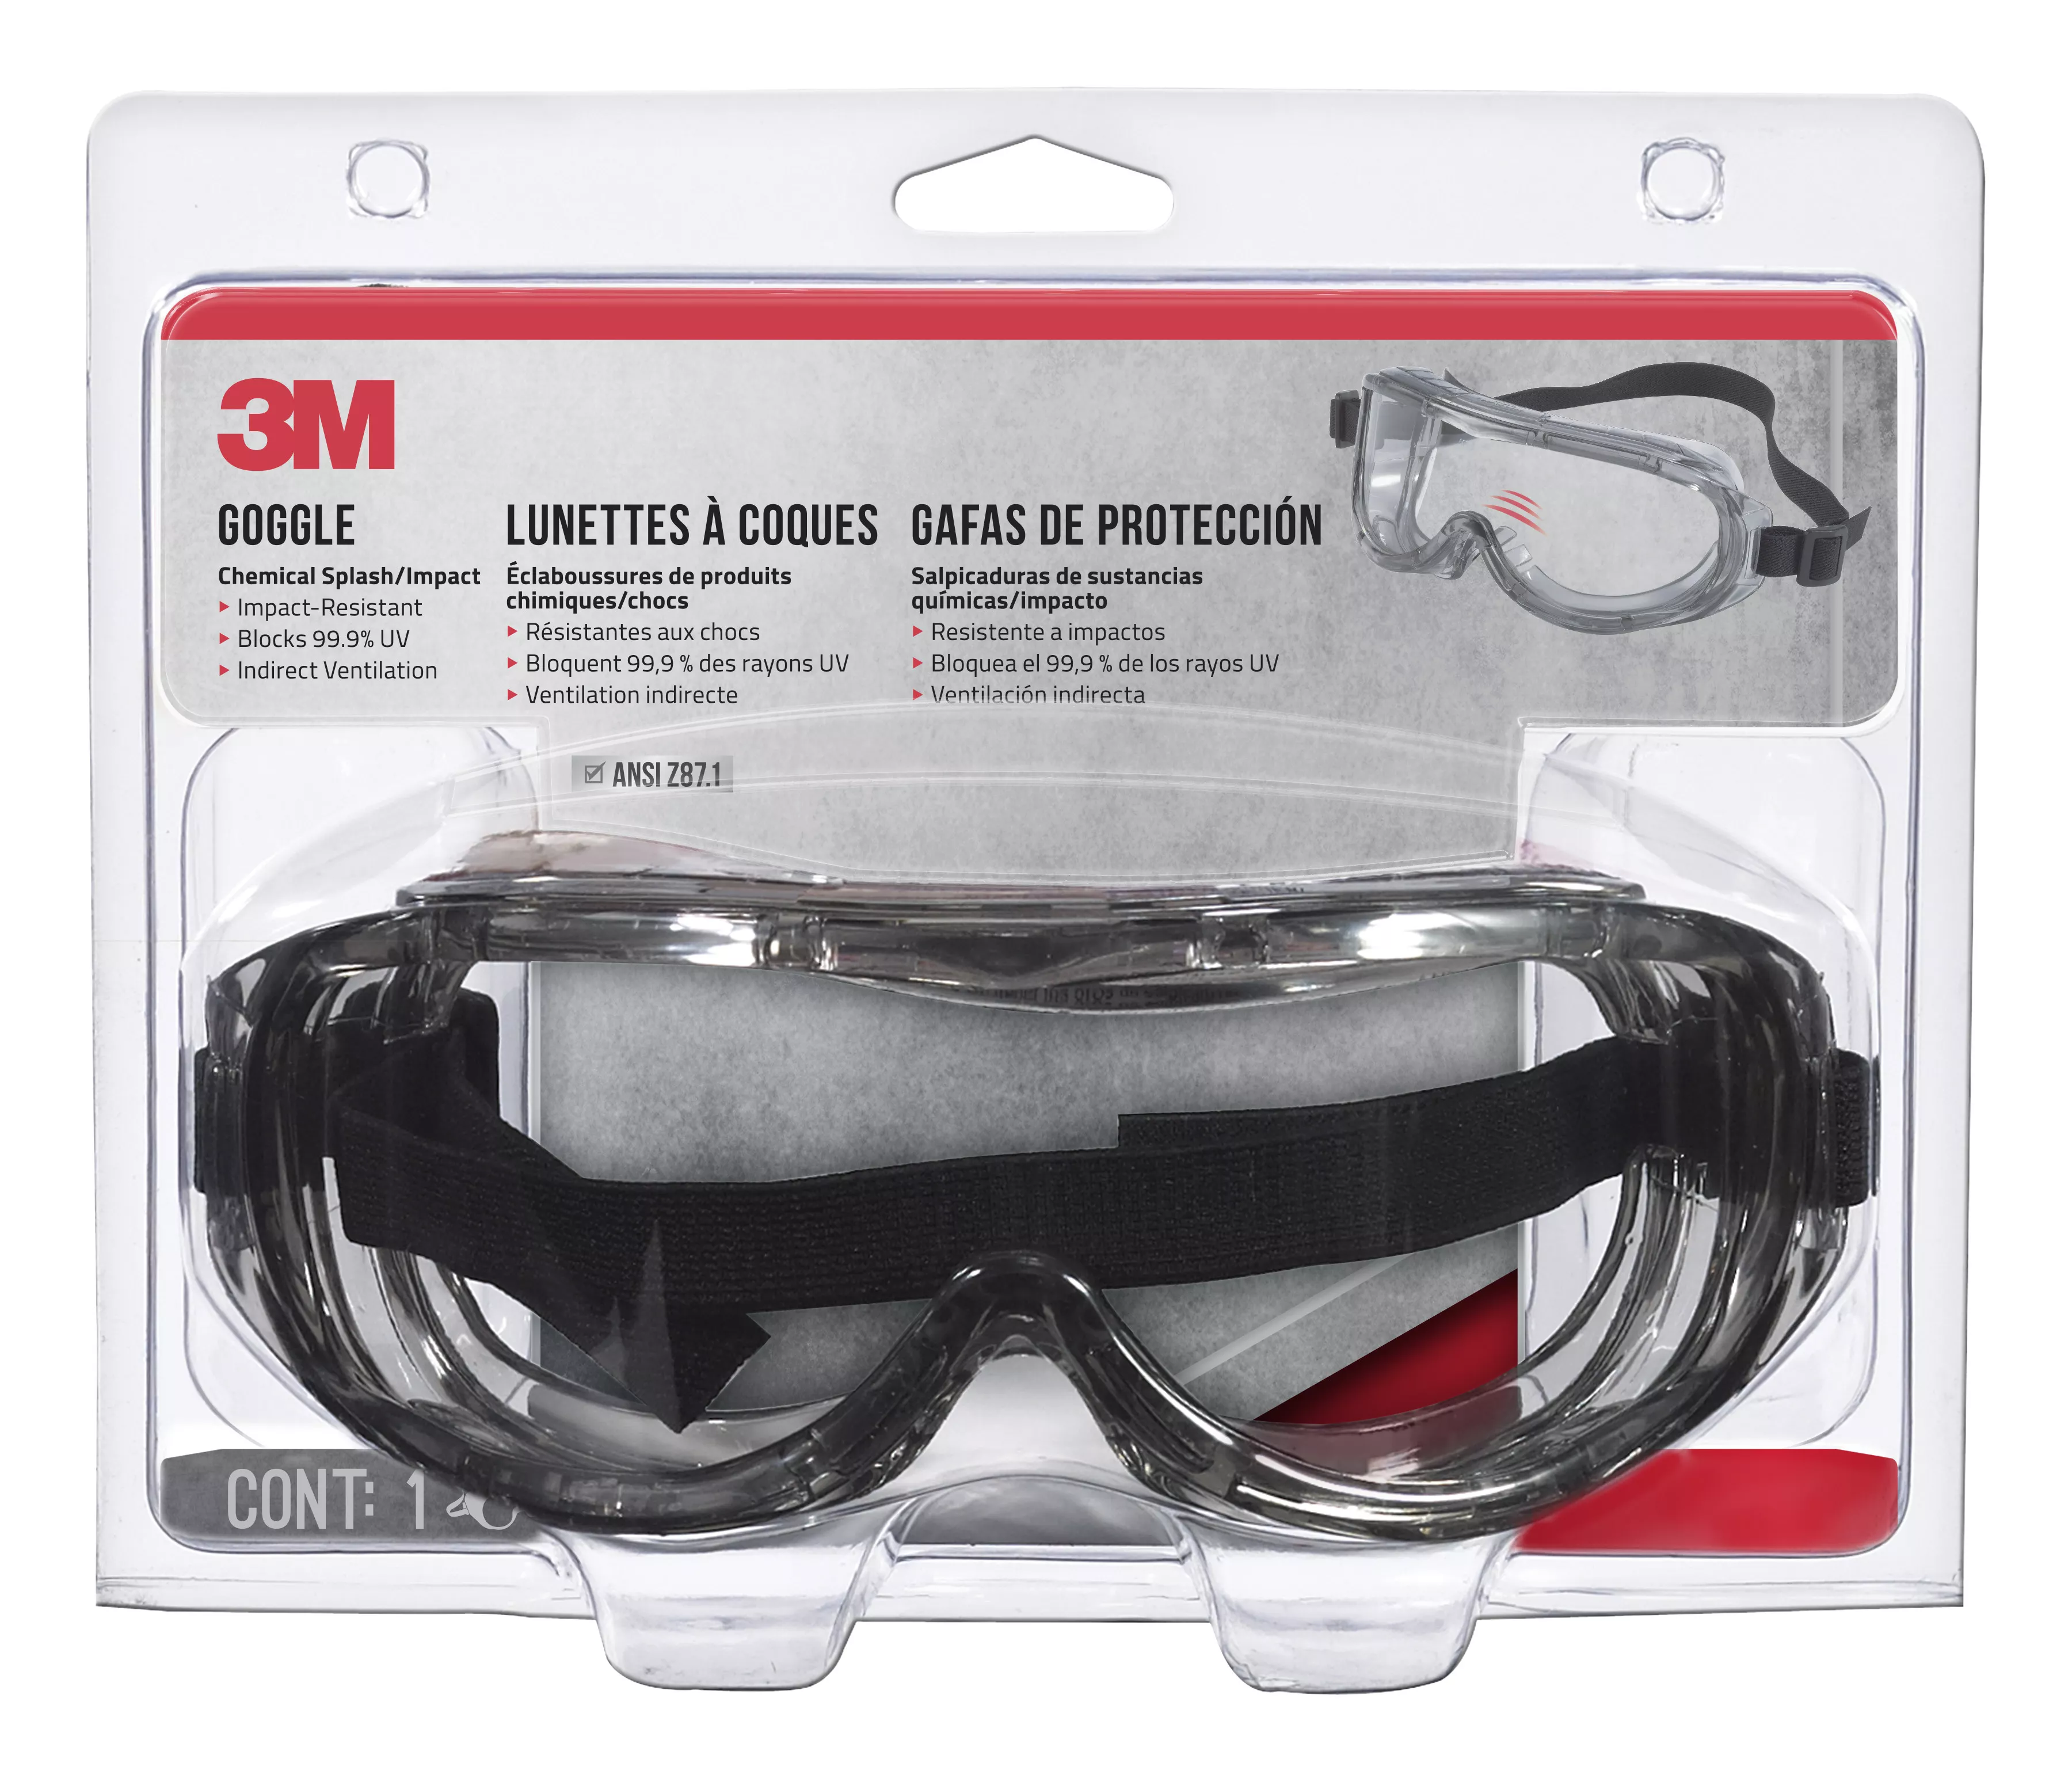 3M™ Professional Goggle, Chemical Splash, 91264H1-DC, Black Strap, Gray
Lens, 4/case